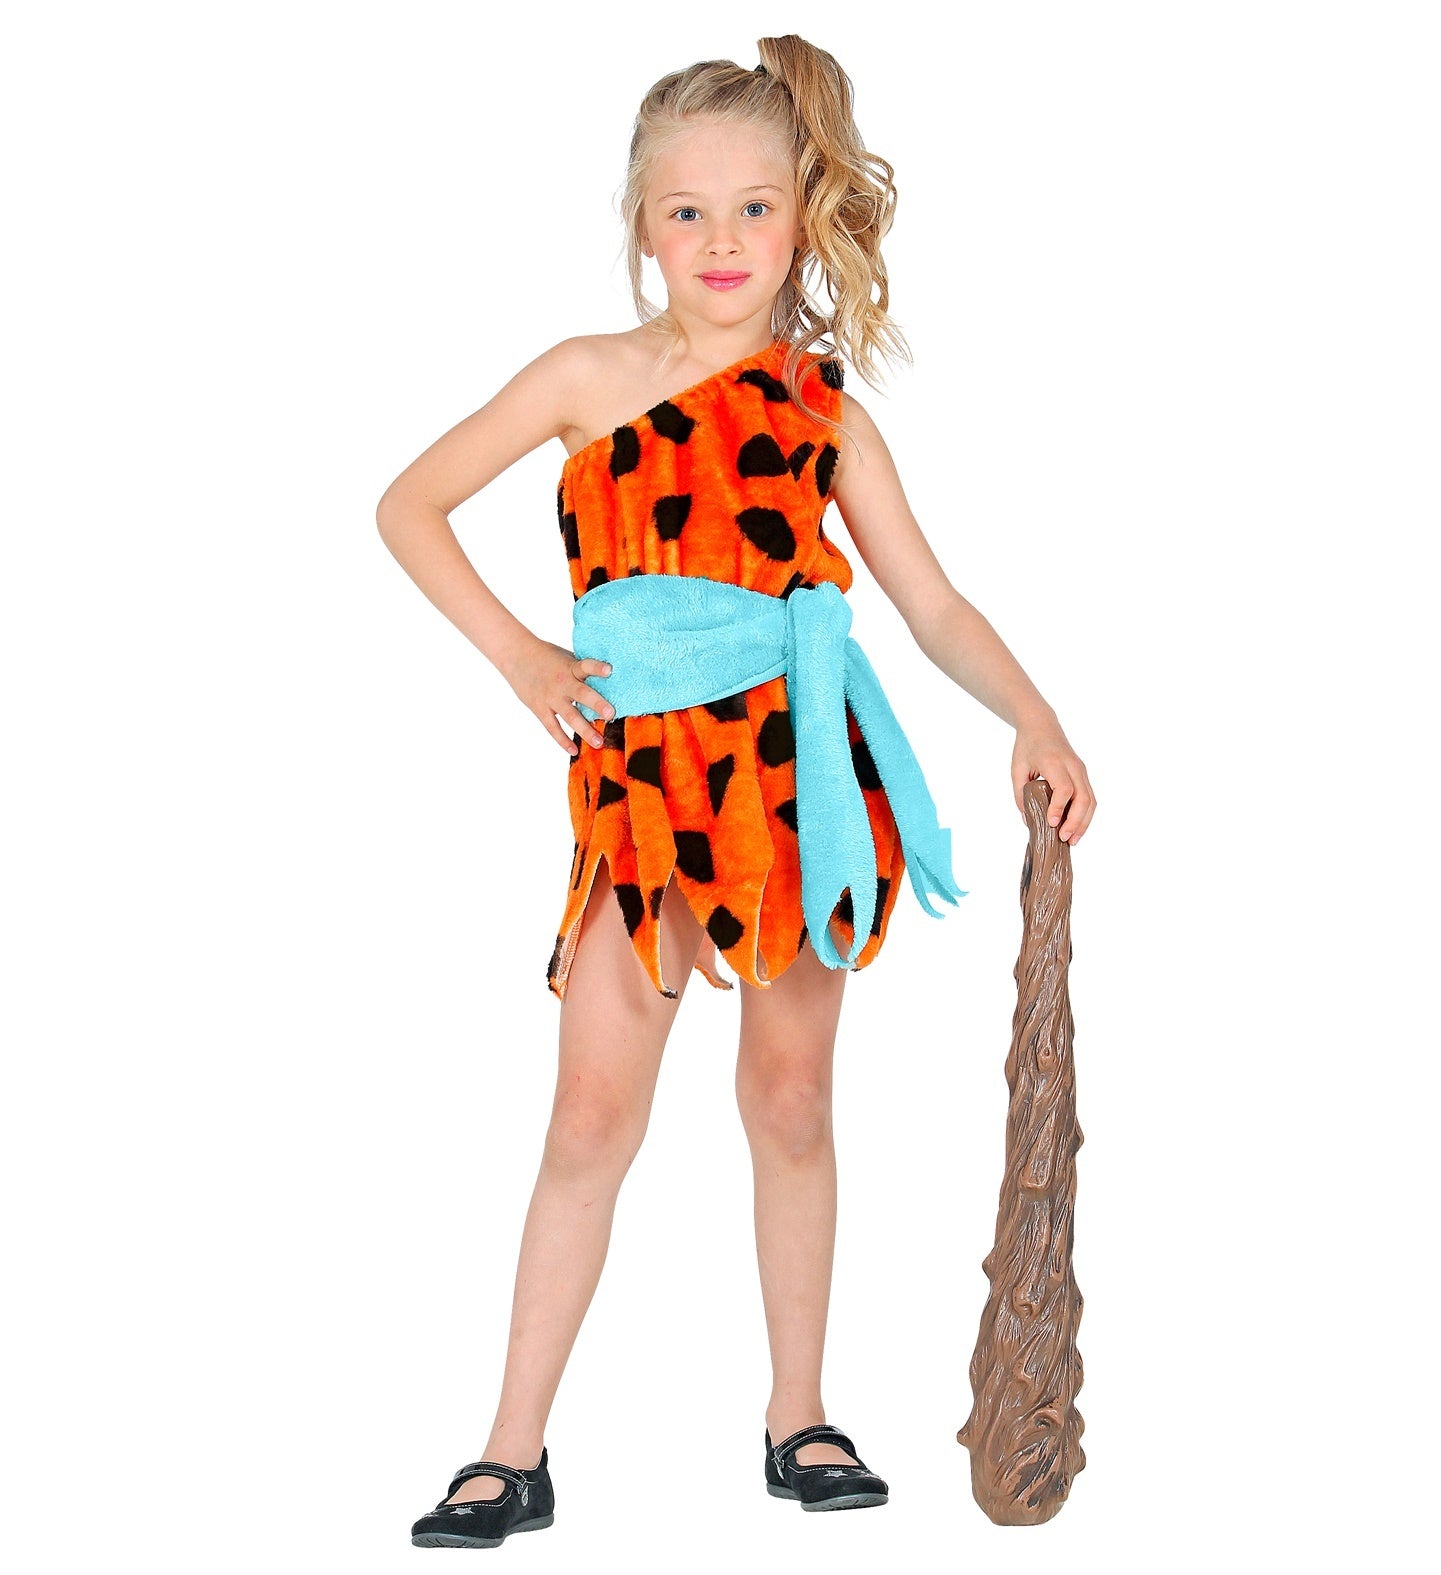 Widmann - The Flintstones Kostuum - Pebbles Flinsteen - Meisje - blauw,oranje - Maat 158 - Carnavalskleding - Verkleedkleding